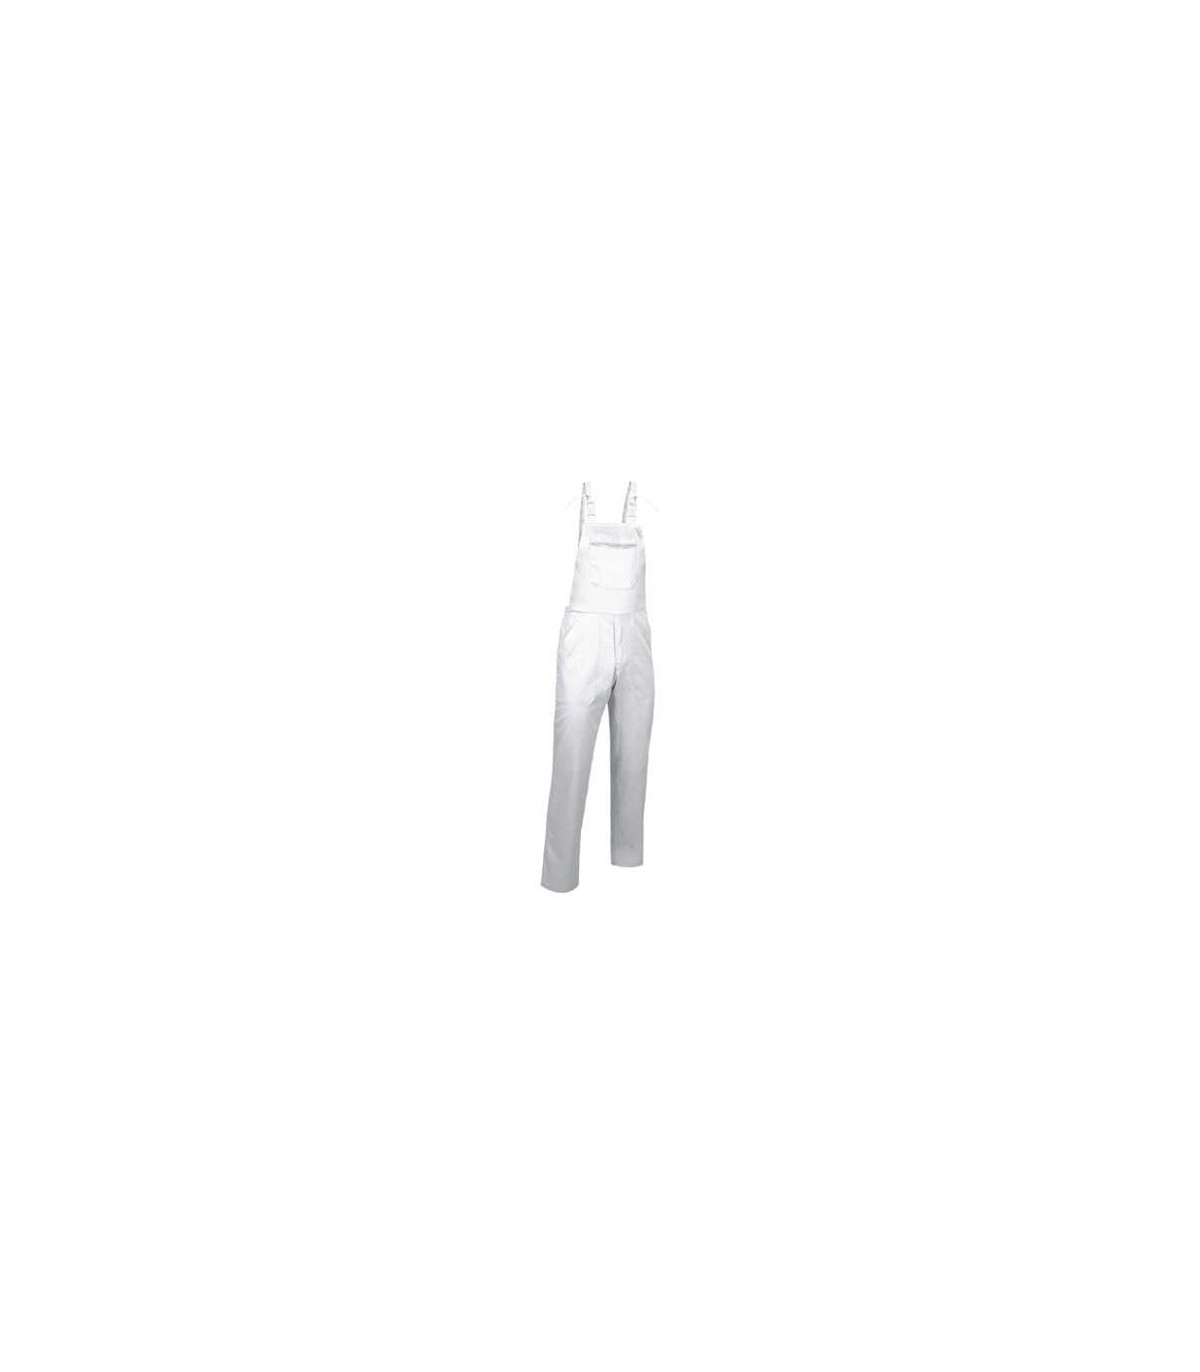 Bata blanca manga larga transpirable de mujer GARY'S Tania skrc-ro, comprar  online